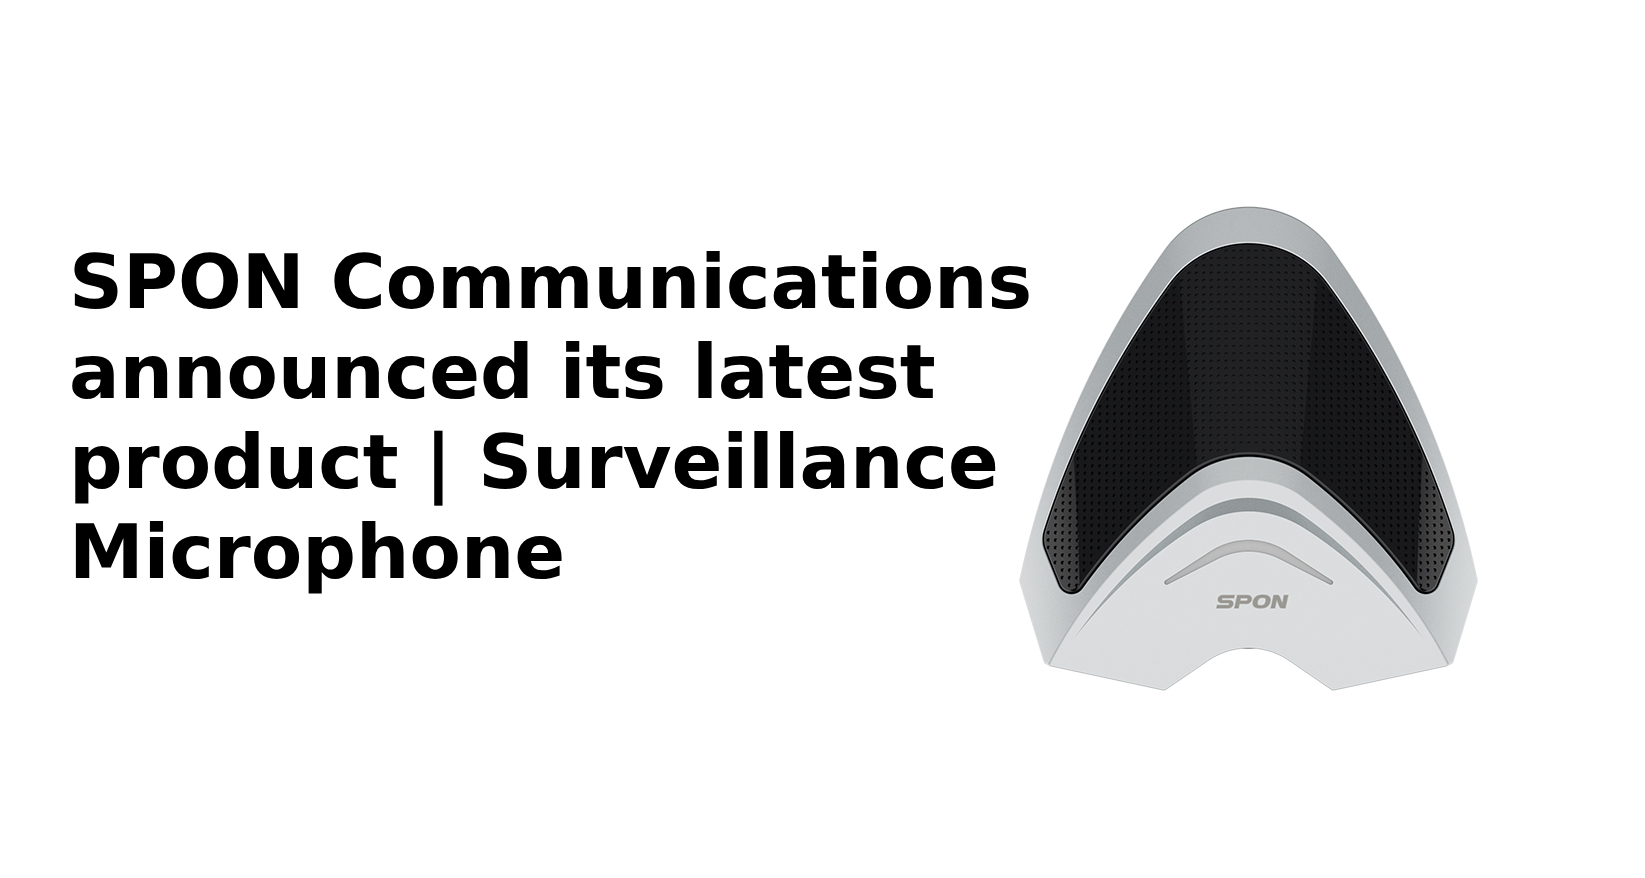 SPON Communications announced its latest product | Surveillance Microphone